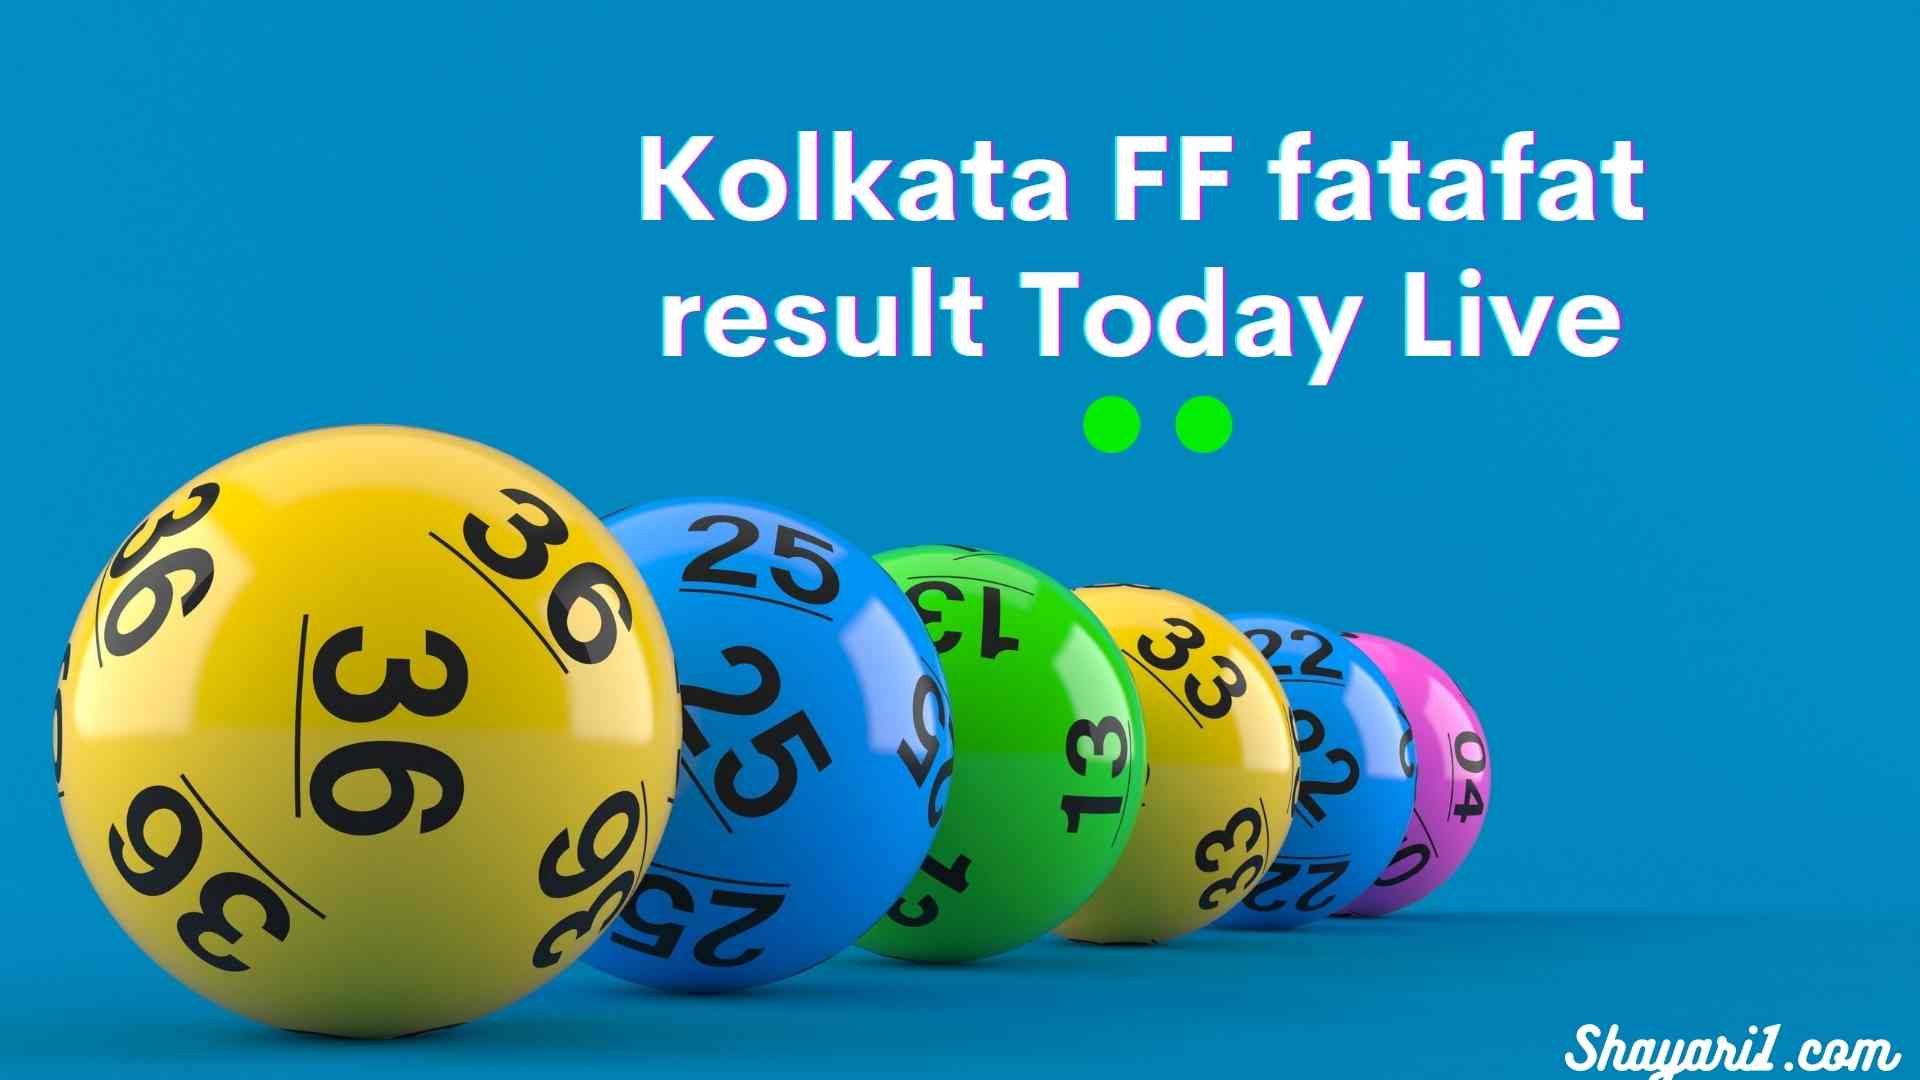 Kolkata FF fatafat result Today